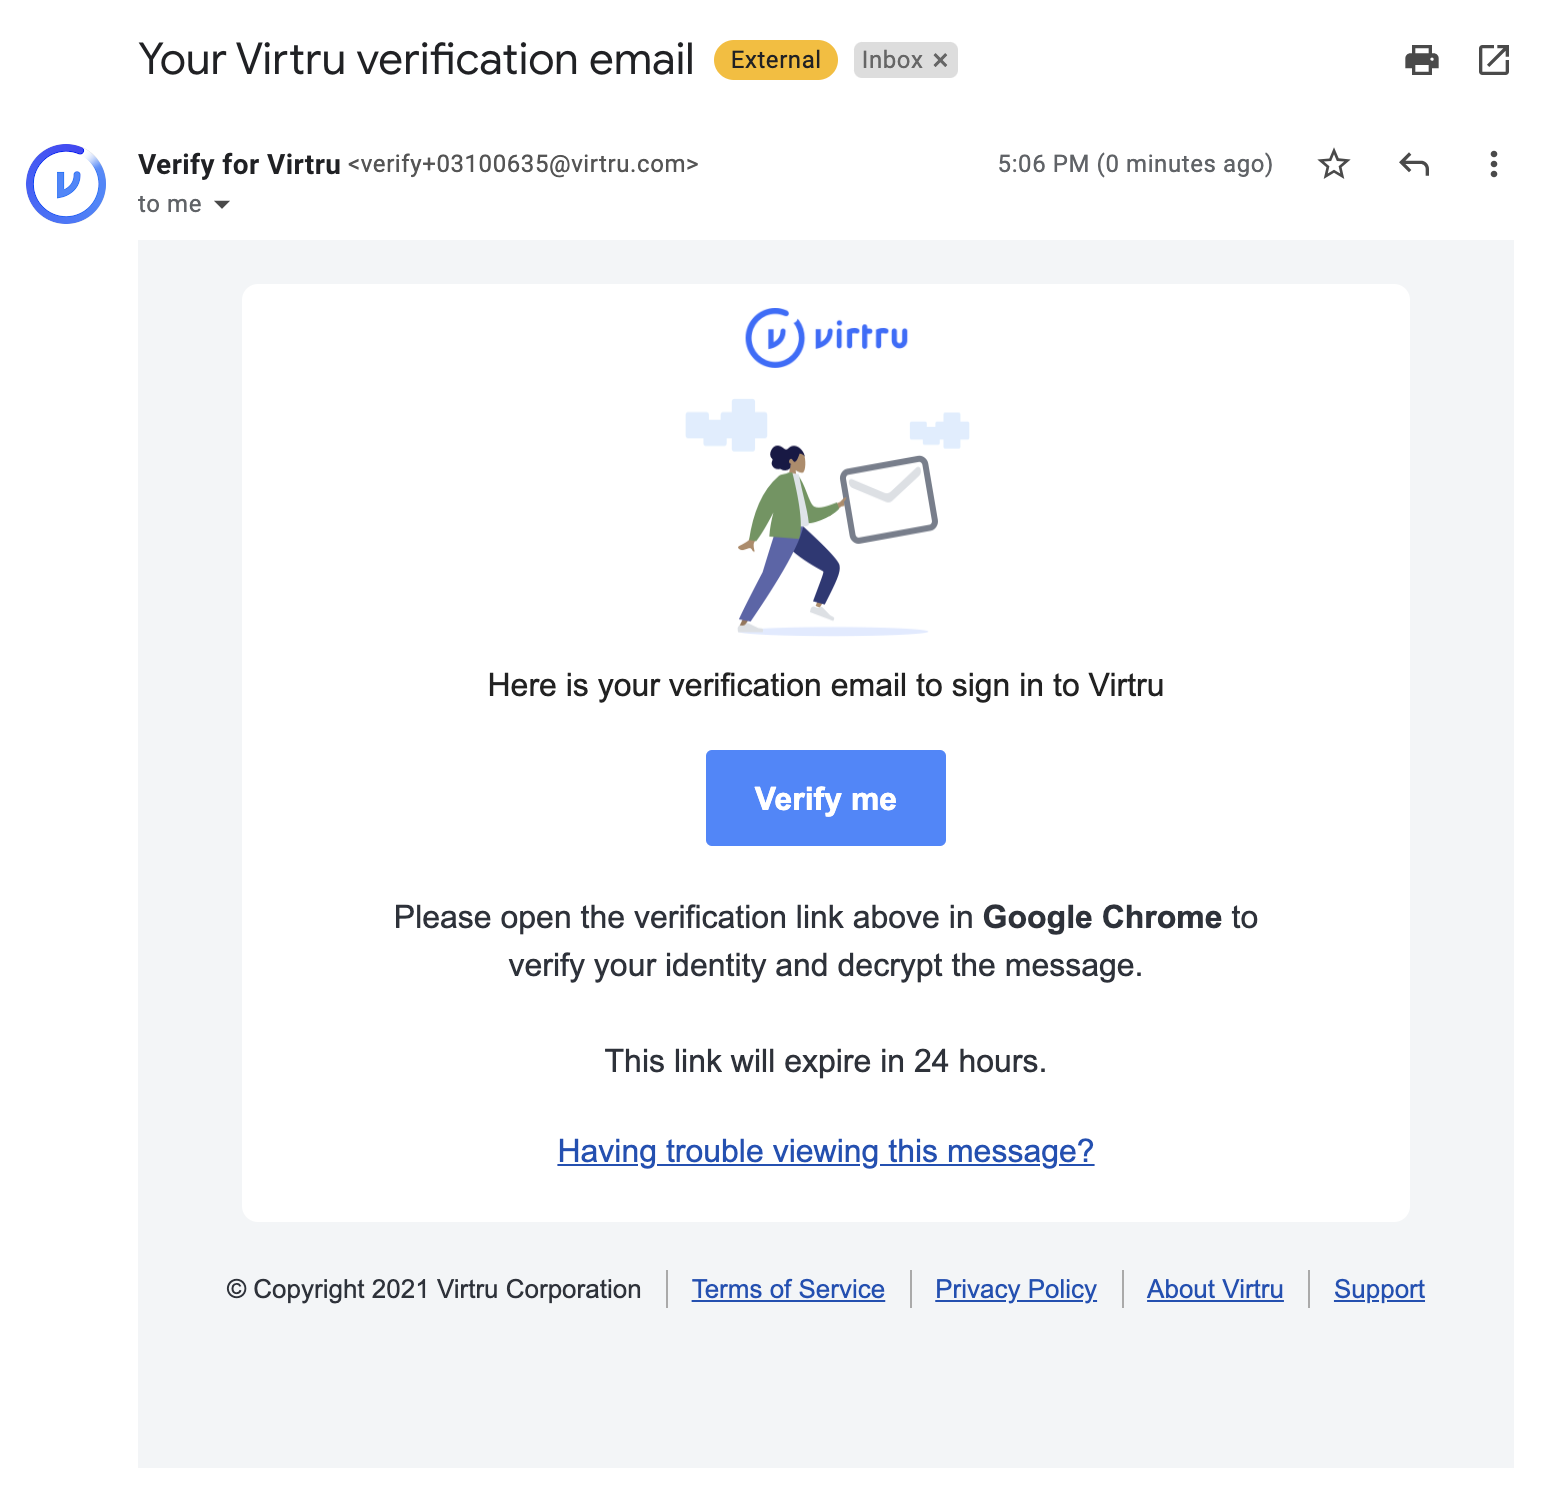 Virtru verification email with verify me button